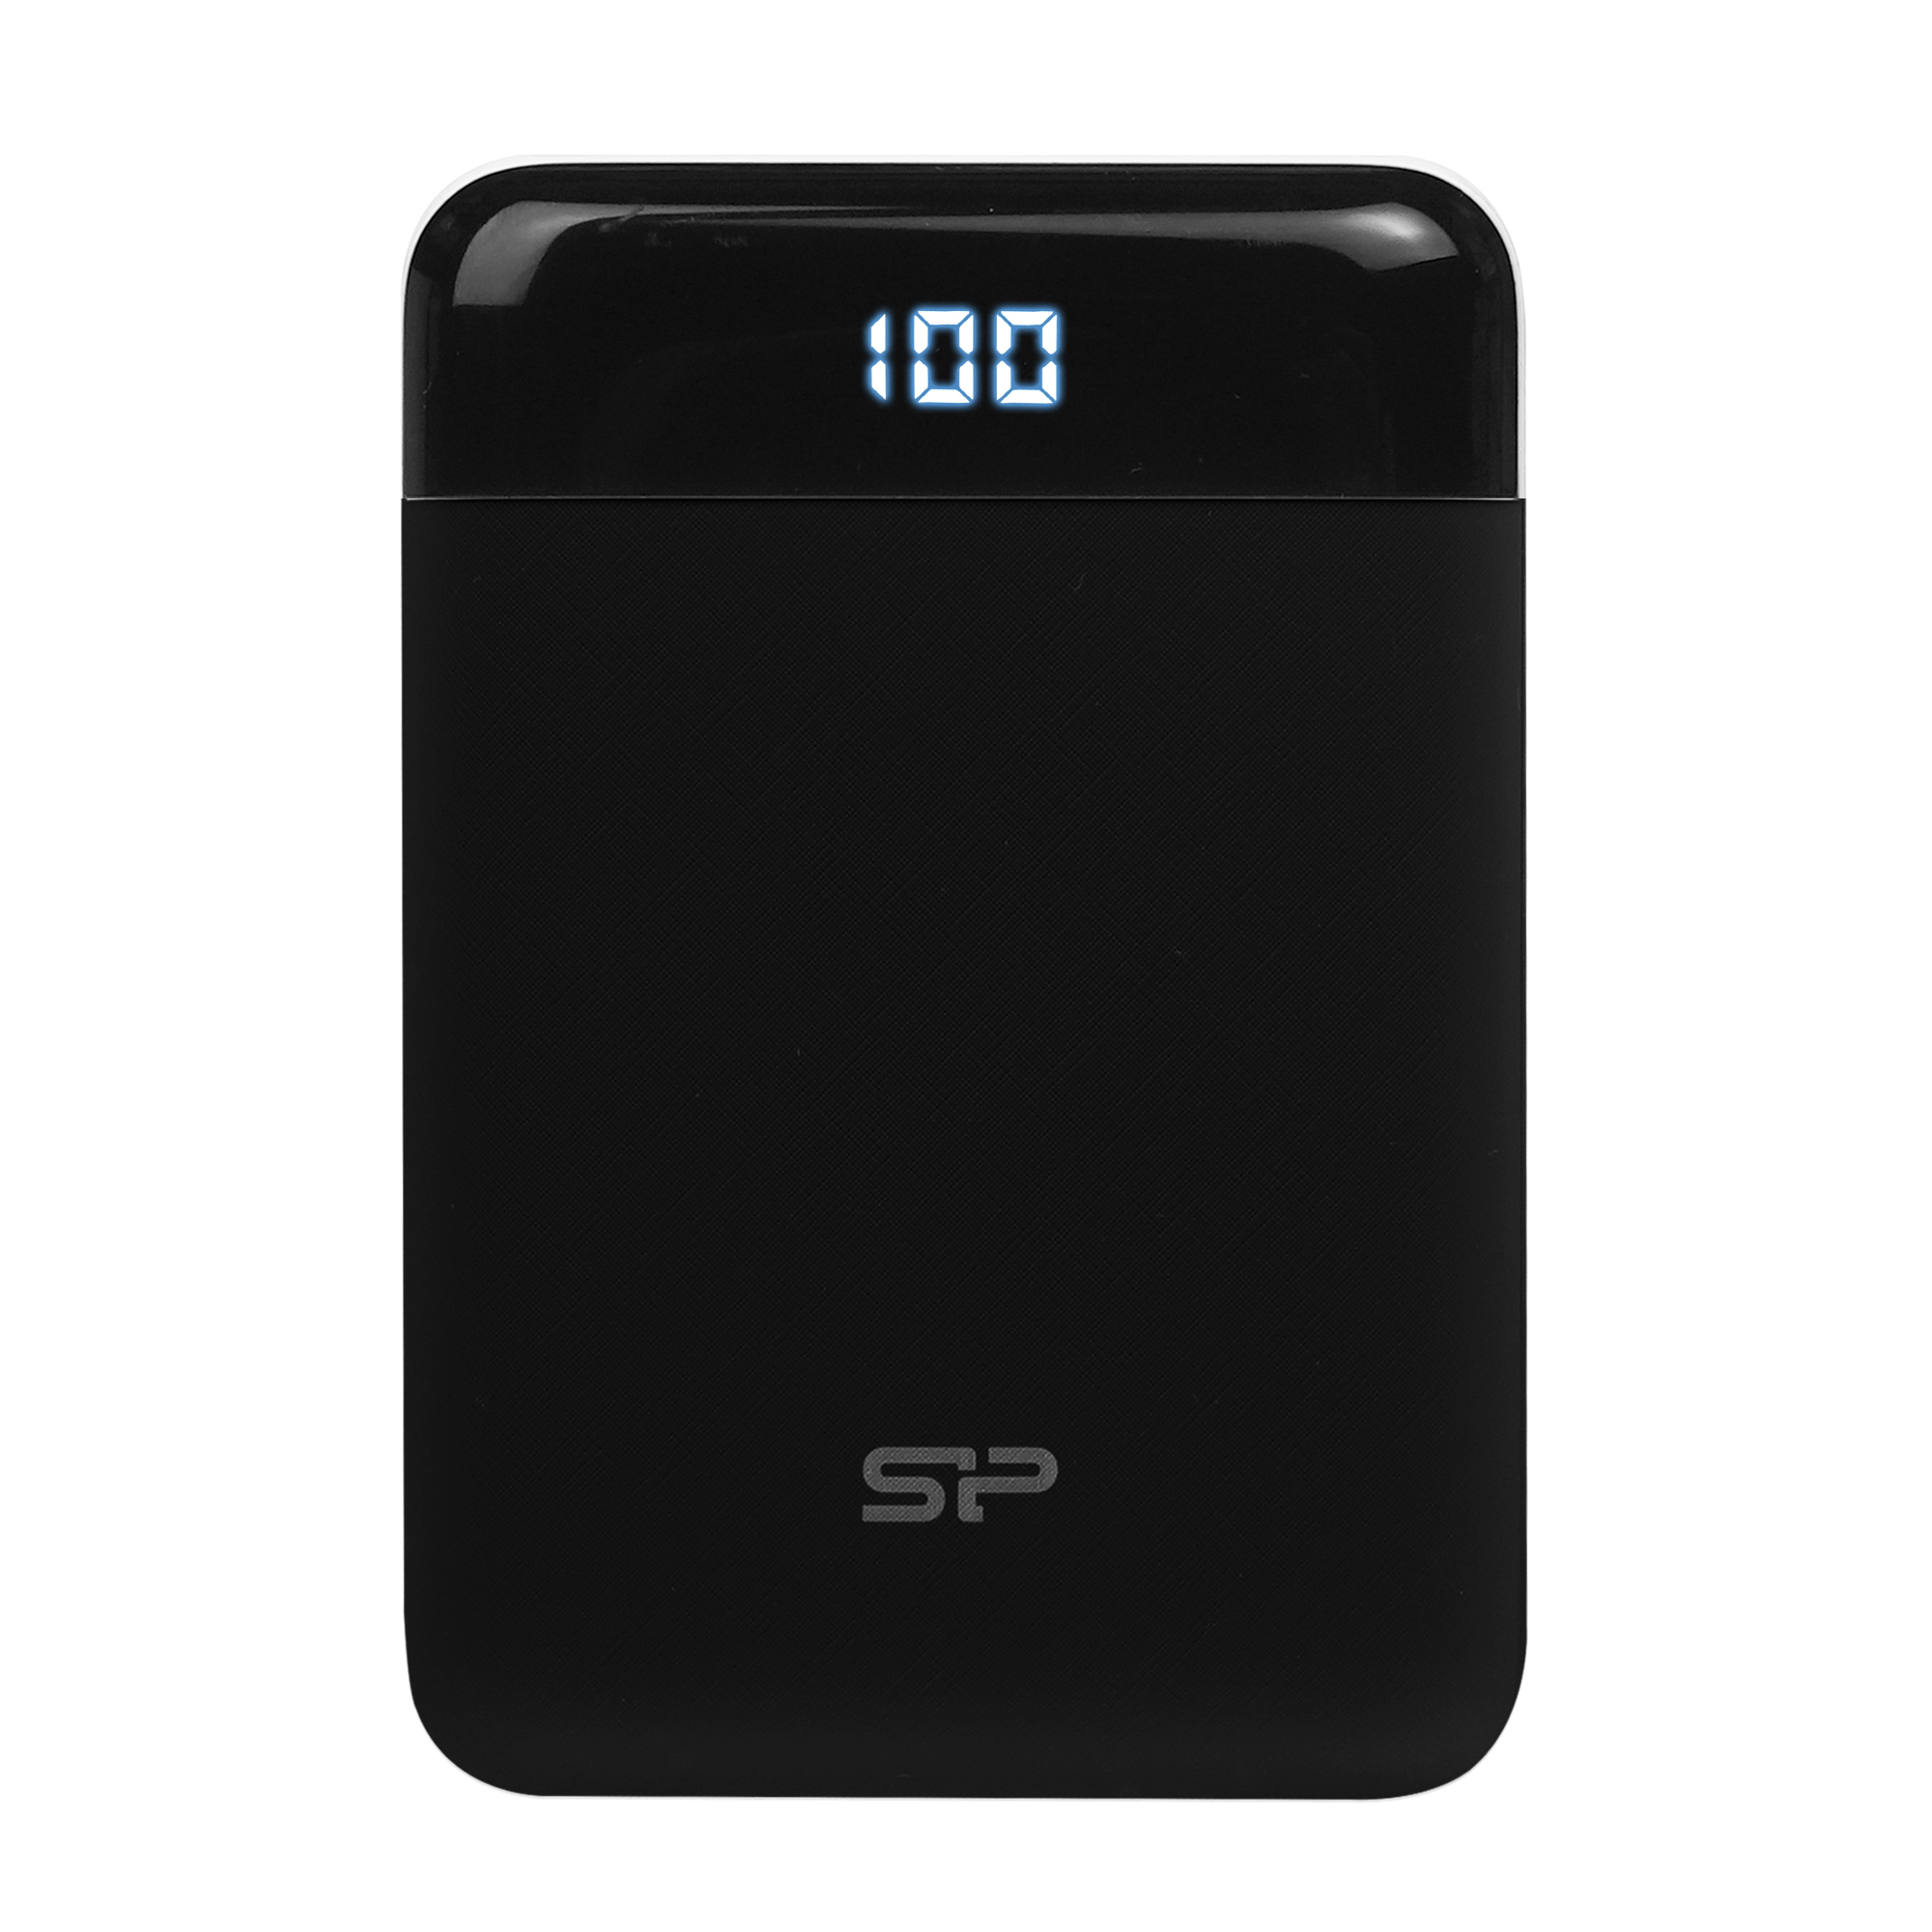 Silicon Power GP25 10,000mAh Power Bank with Dual USB Output and LED Display, black